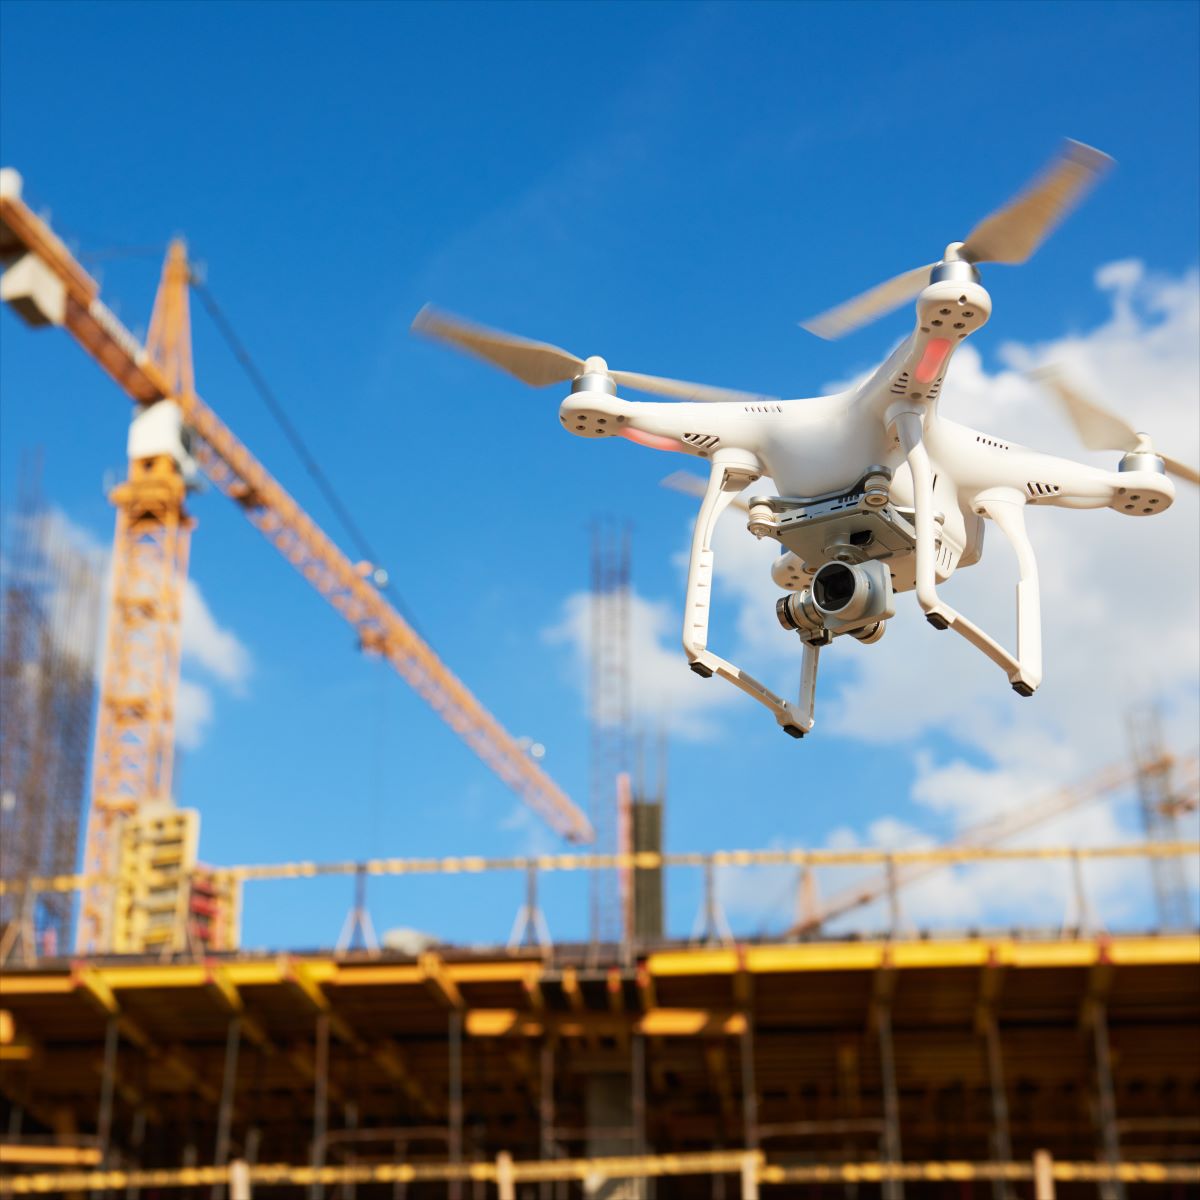 Construction drone capturing Dallas construction photo documentation on job site.